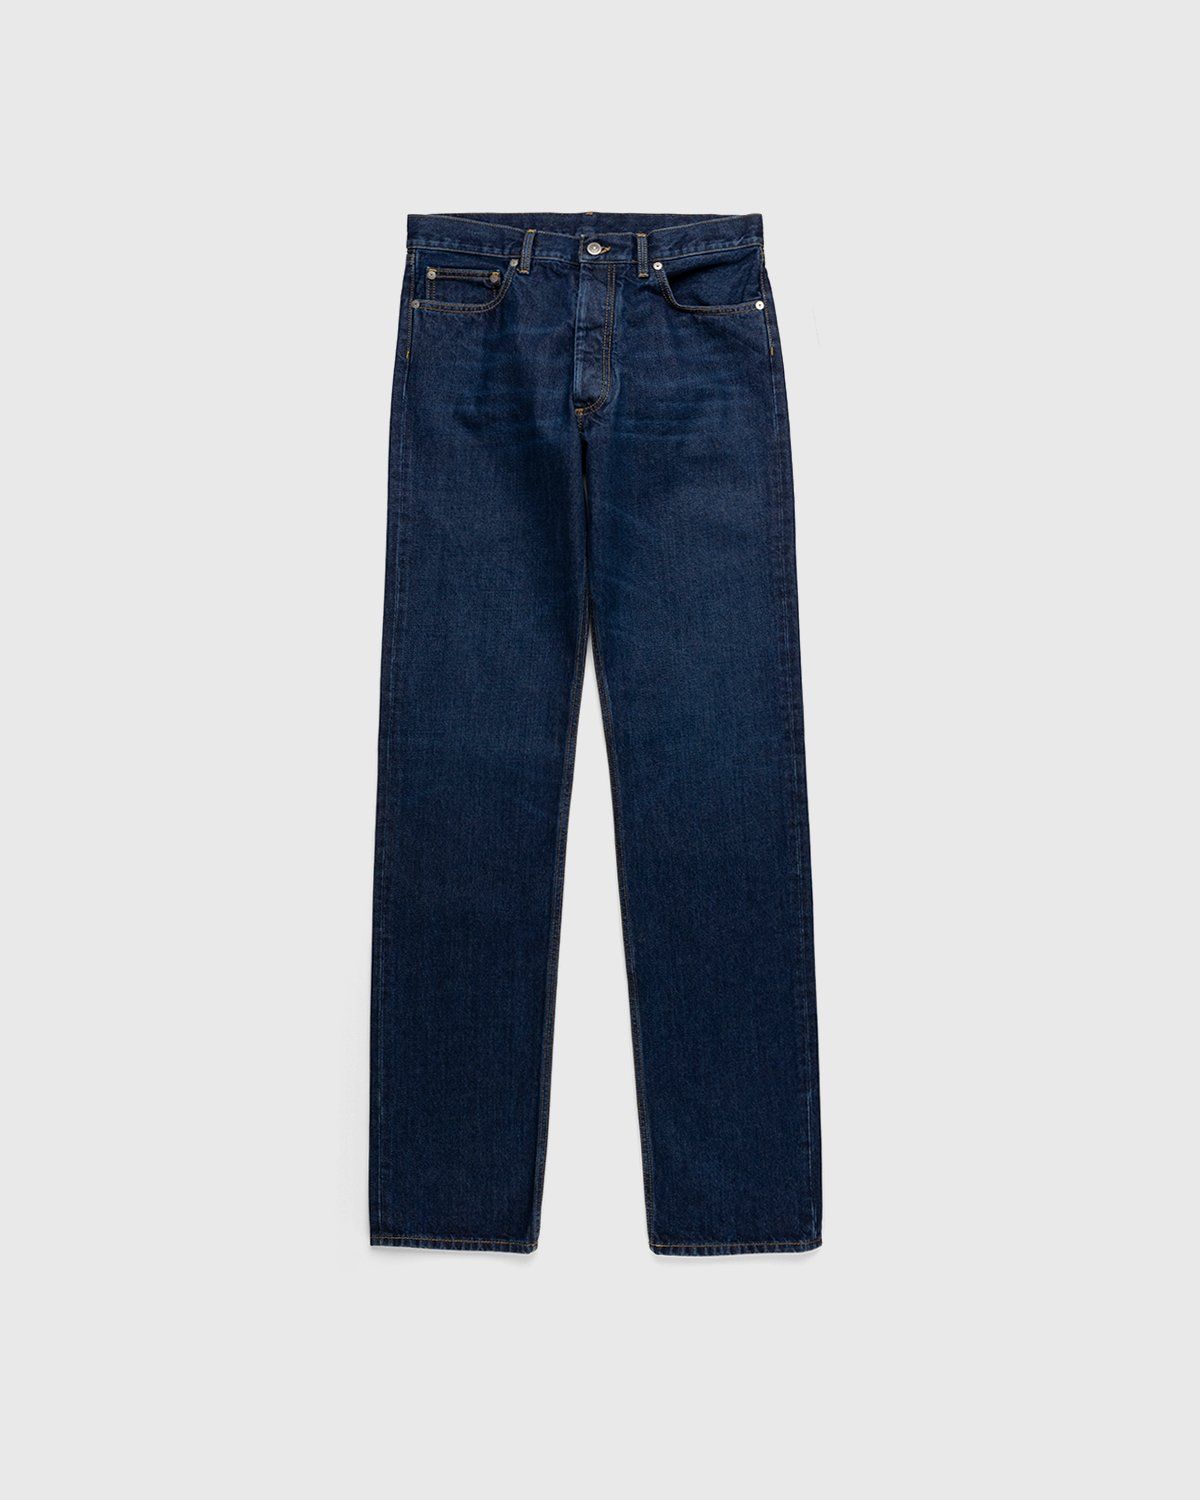 Maison Margiela – 5 Pocket Jeans Blue - Denim - Blue - Image 1